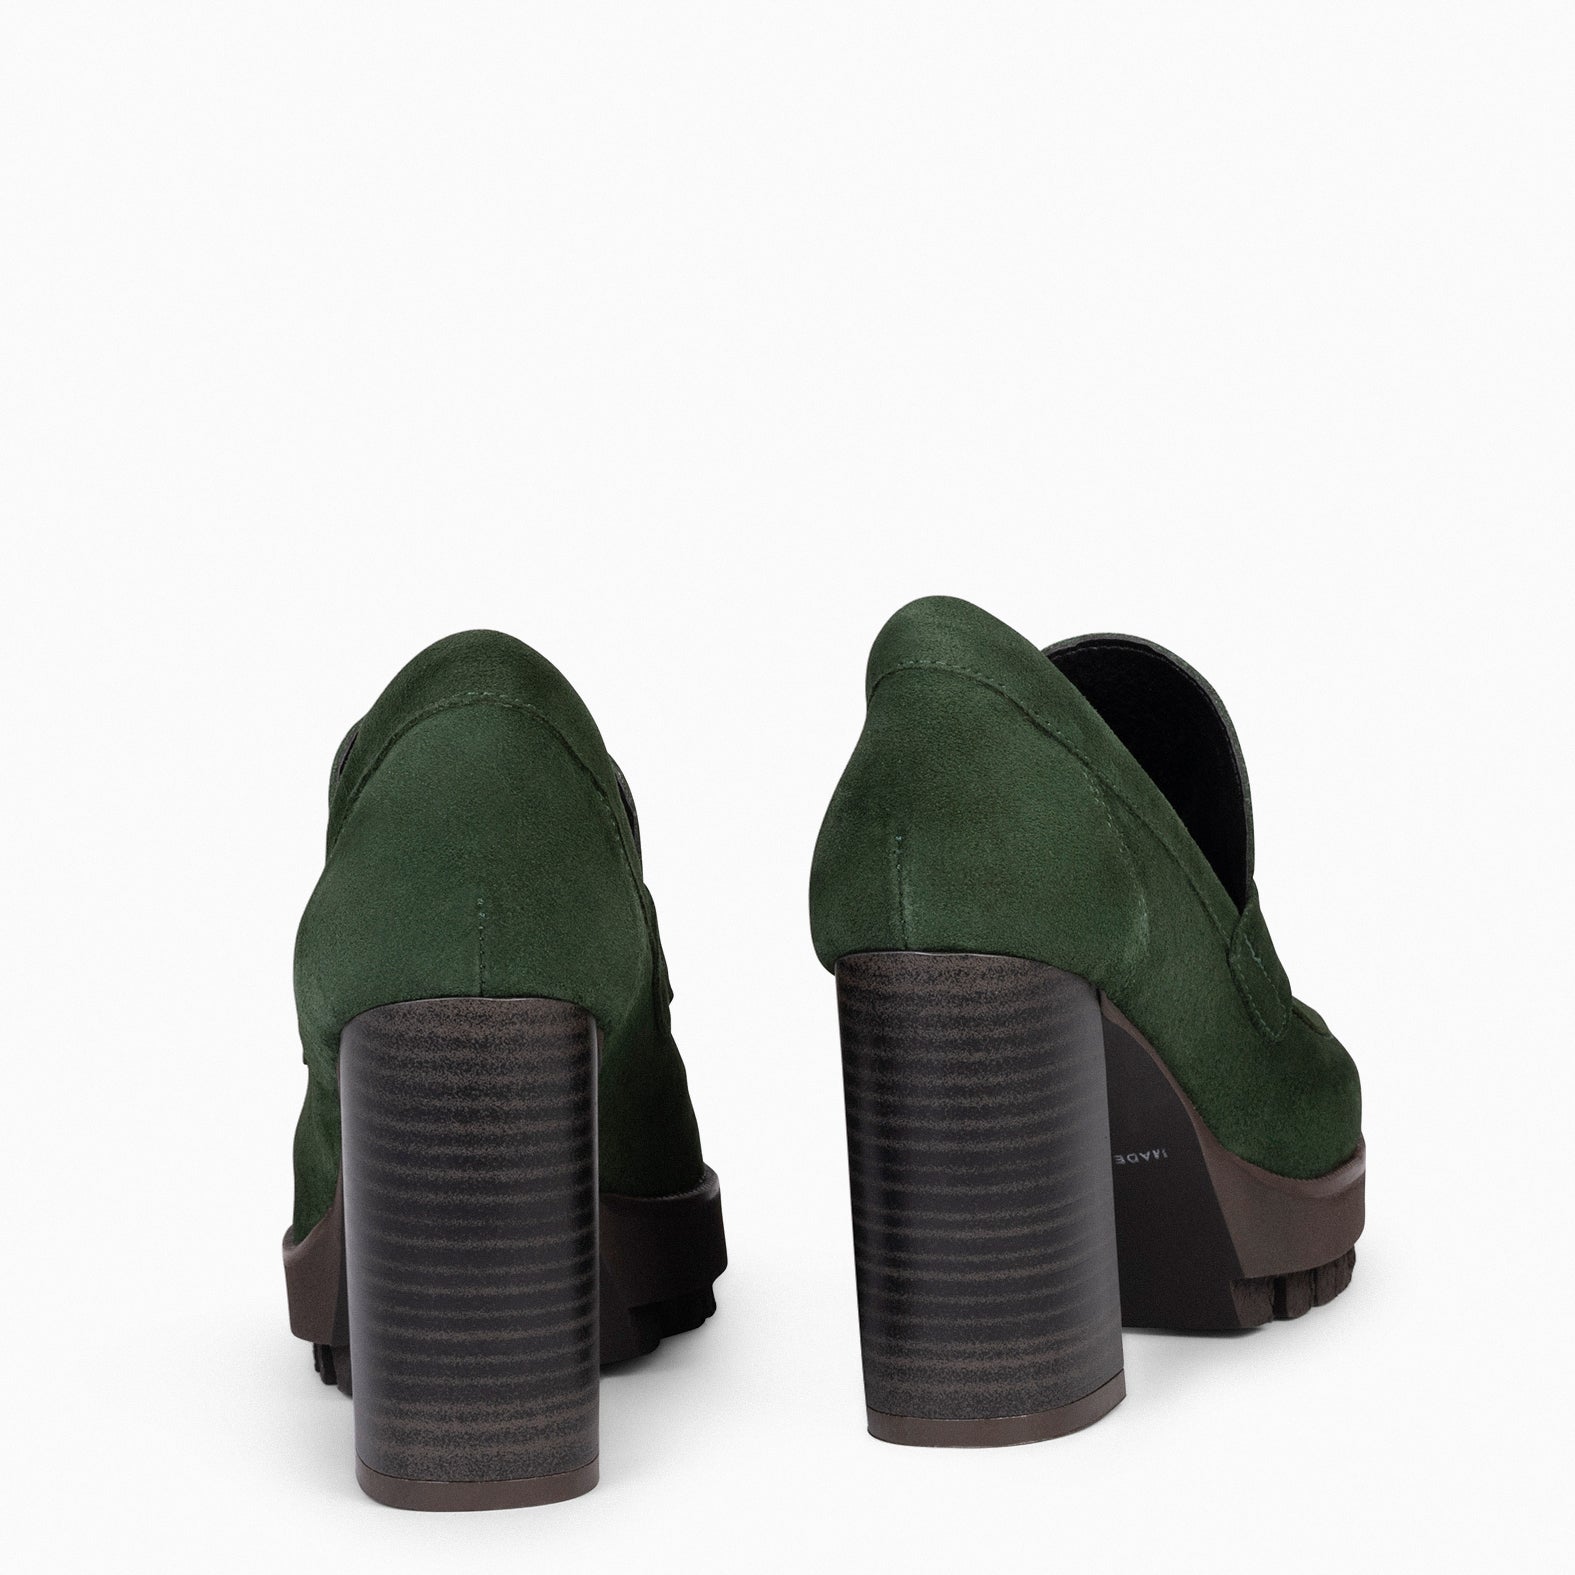 TREND – GREEN high heel moccasins with platform 